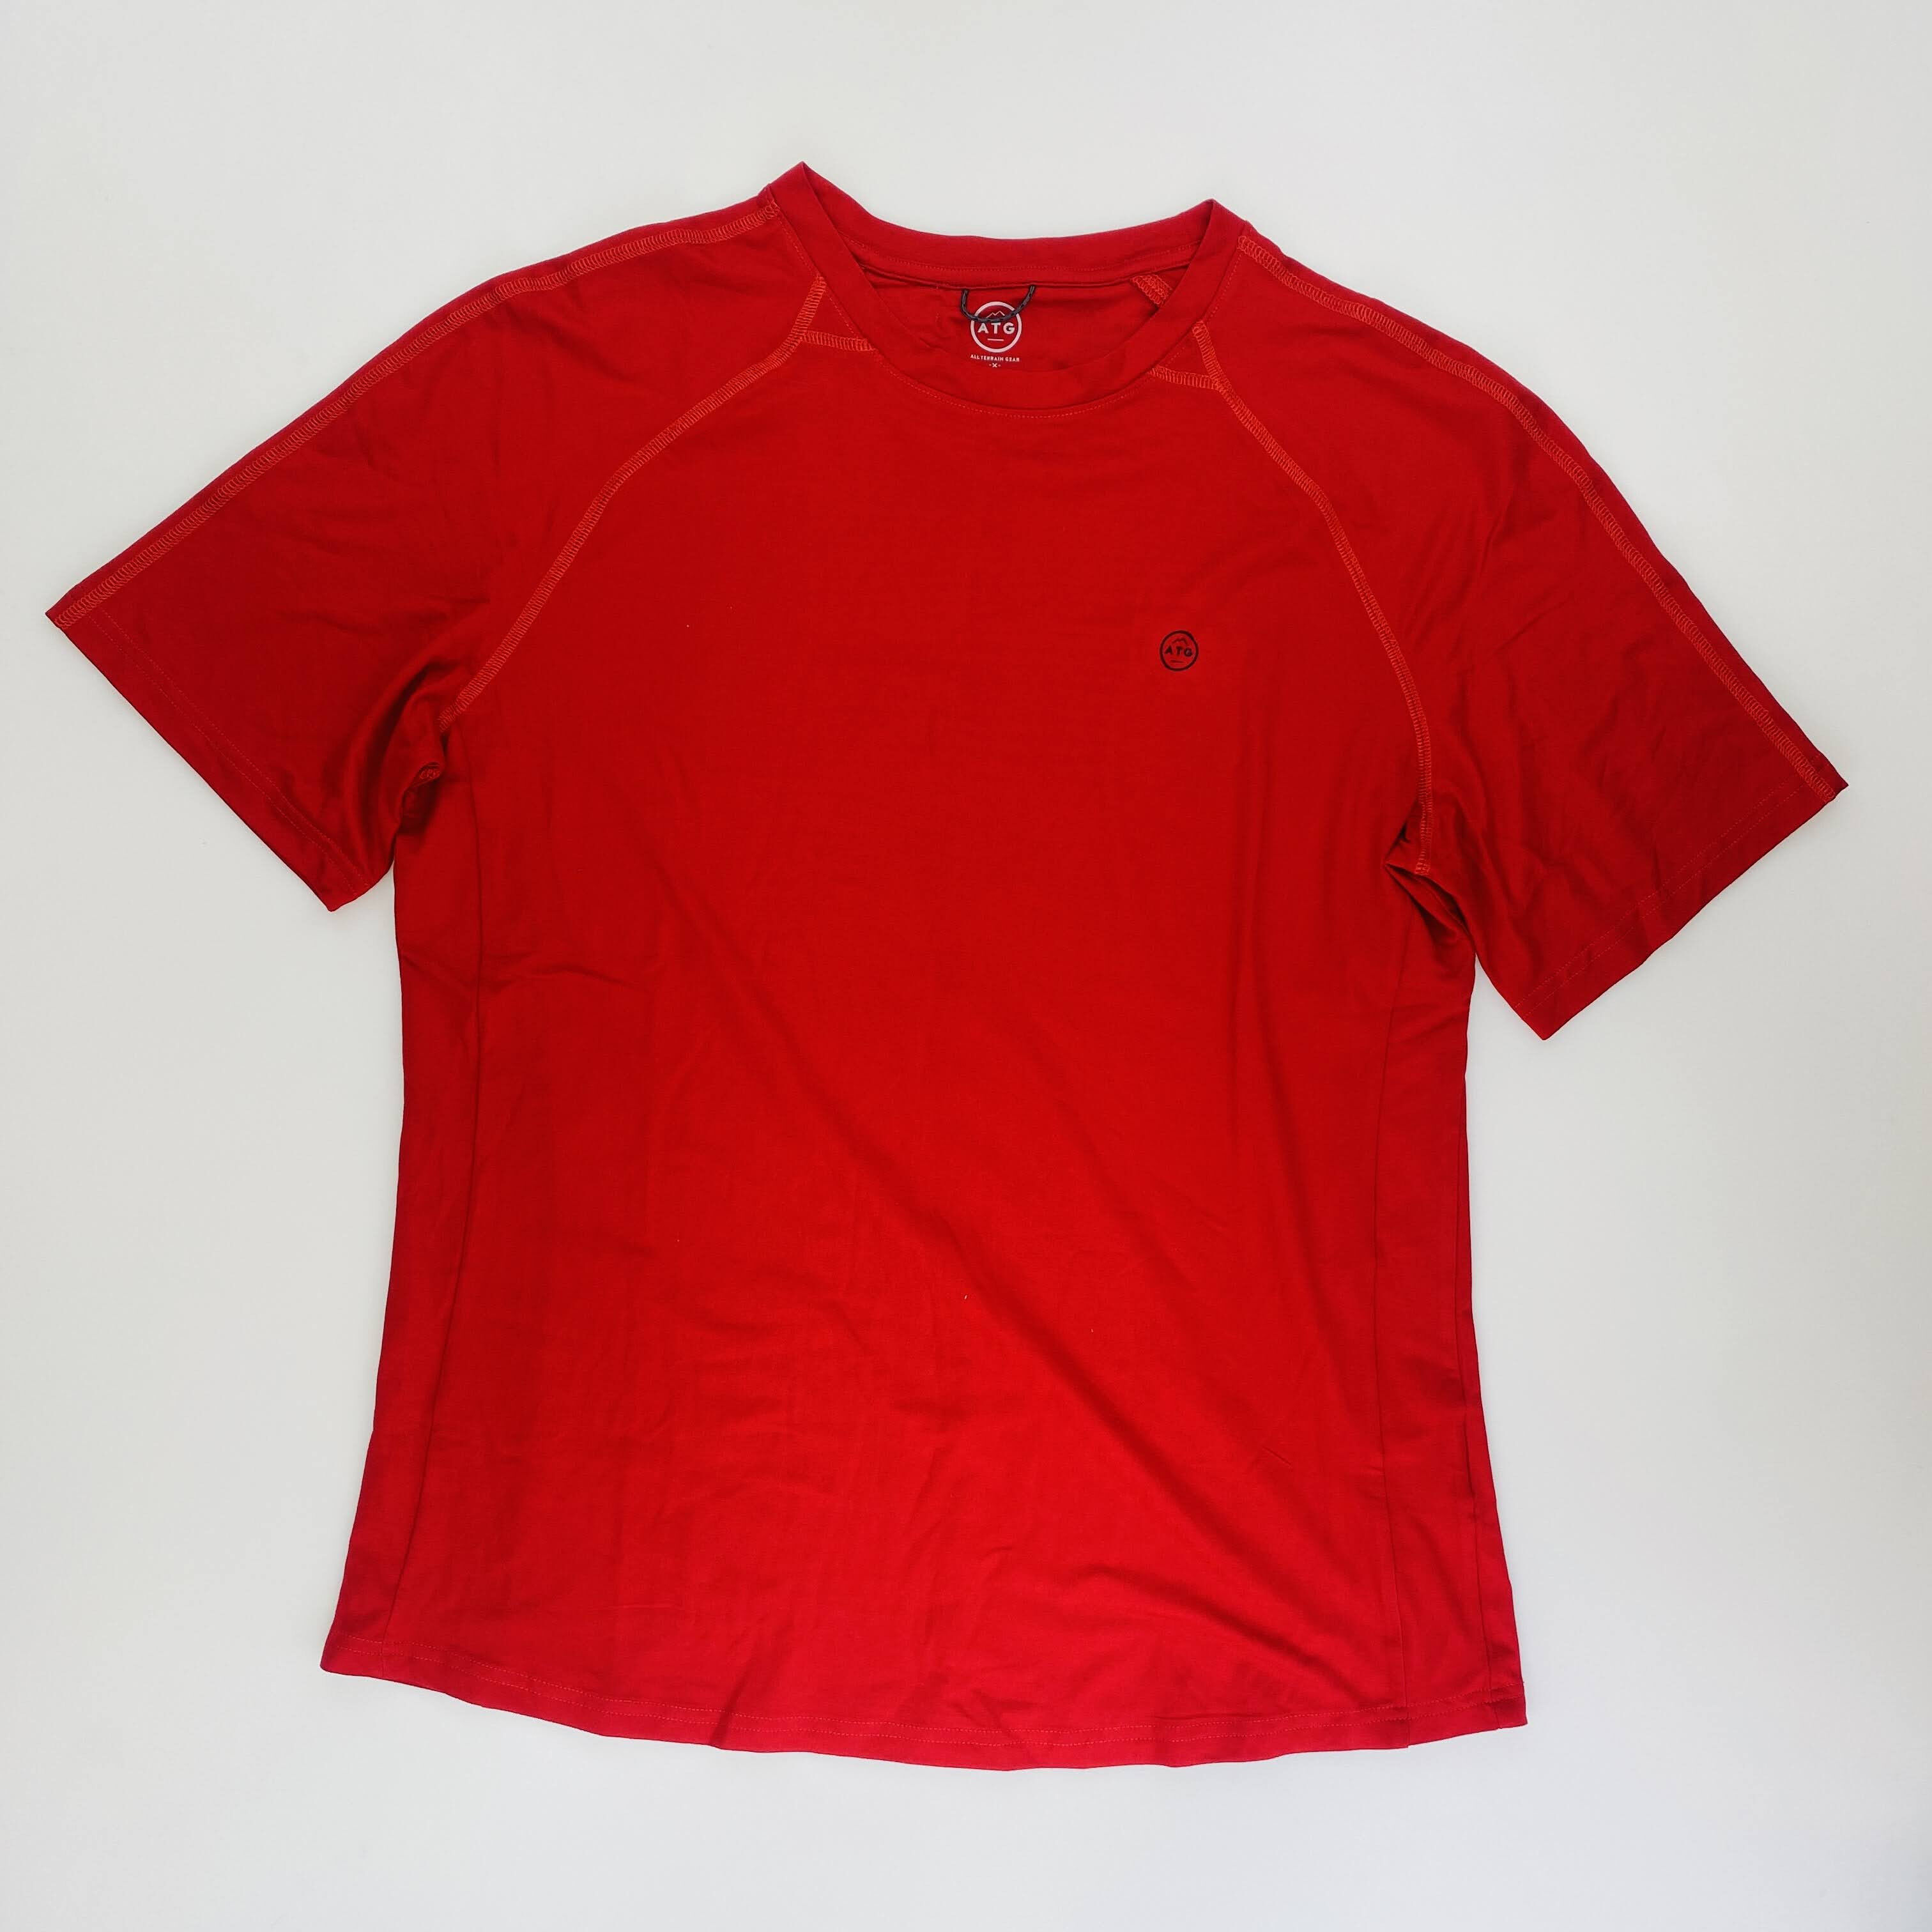 Wrangler Ss Performance T Shirt - Seconde main T-shirt homme - Rouge - XL | Hardloop